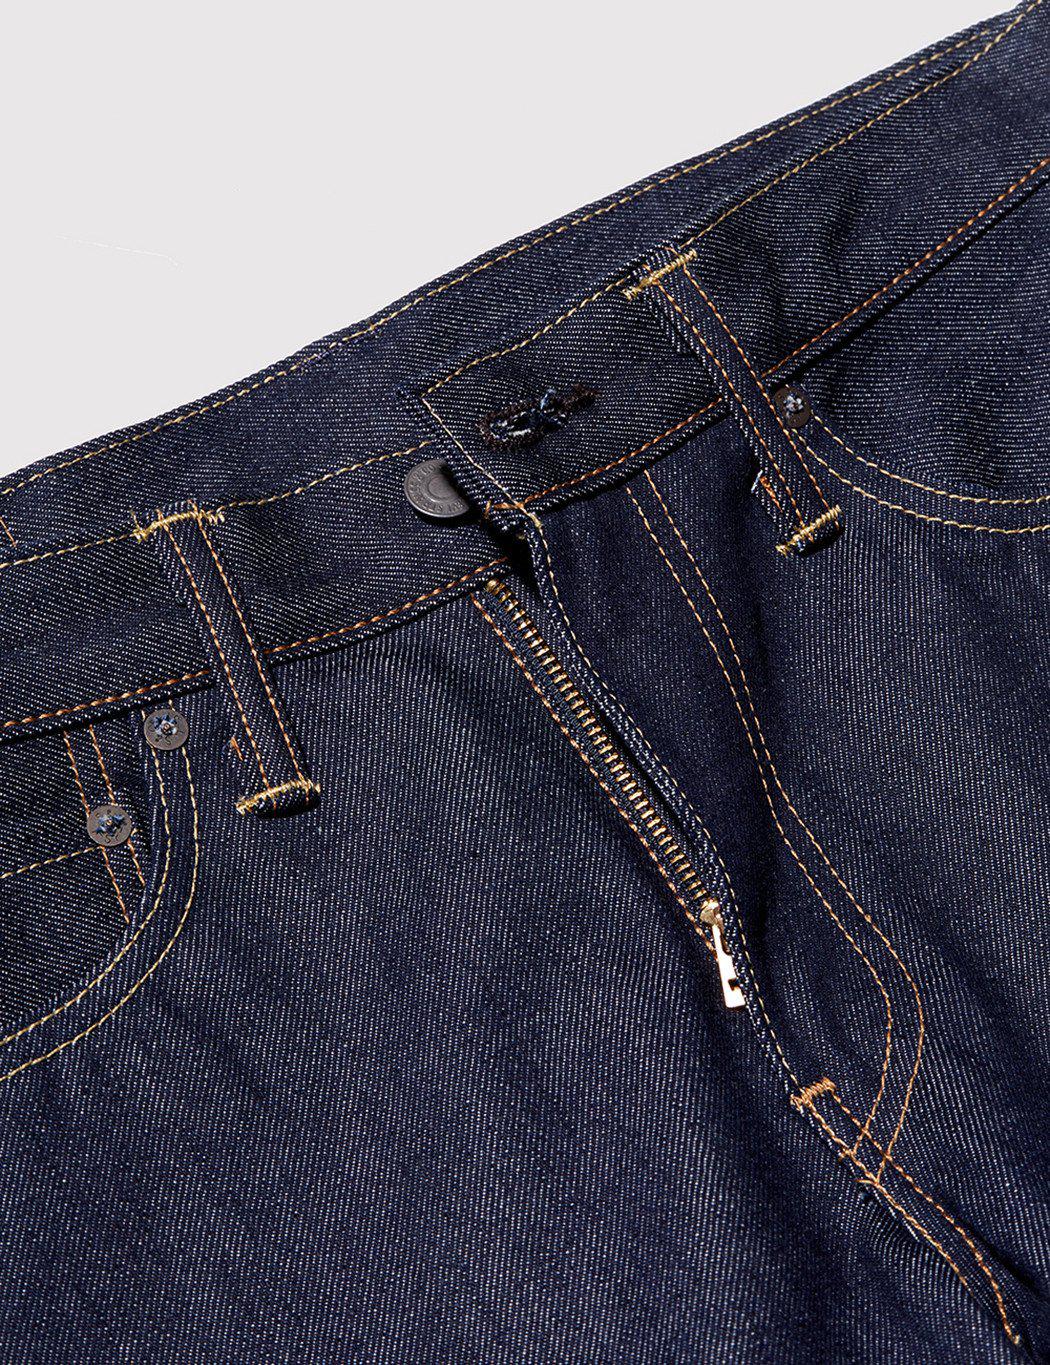 Levi's Denim 511 Jeans Selvedge Raw Jeans (slim) in Blue for Men - Lyst